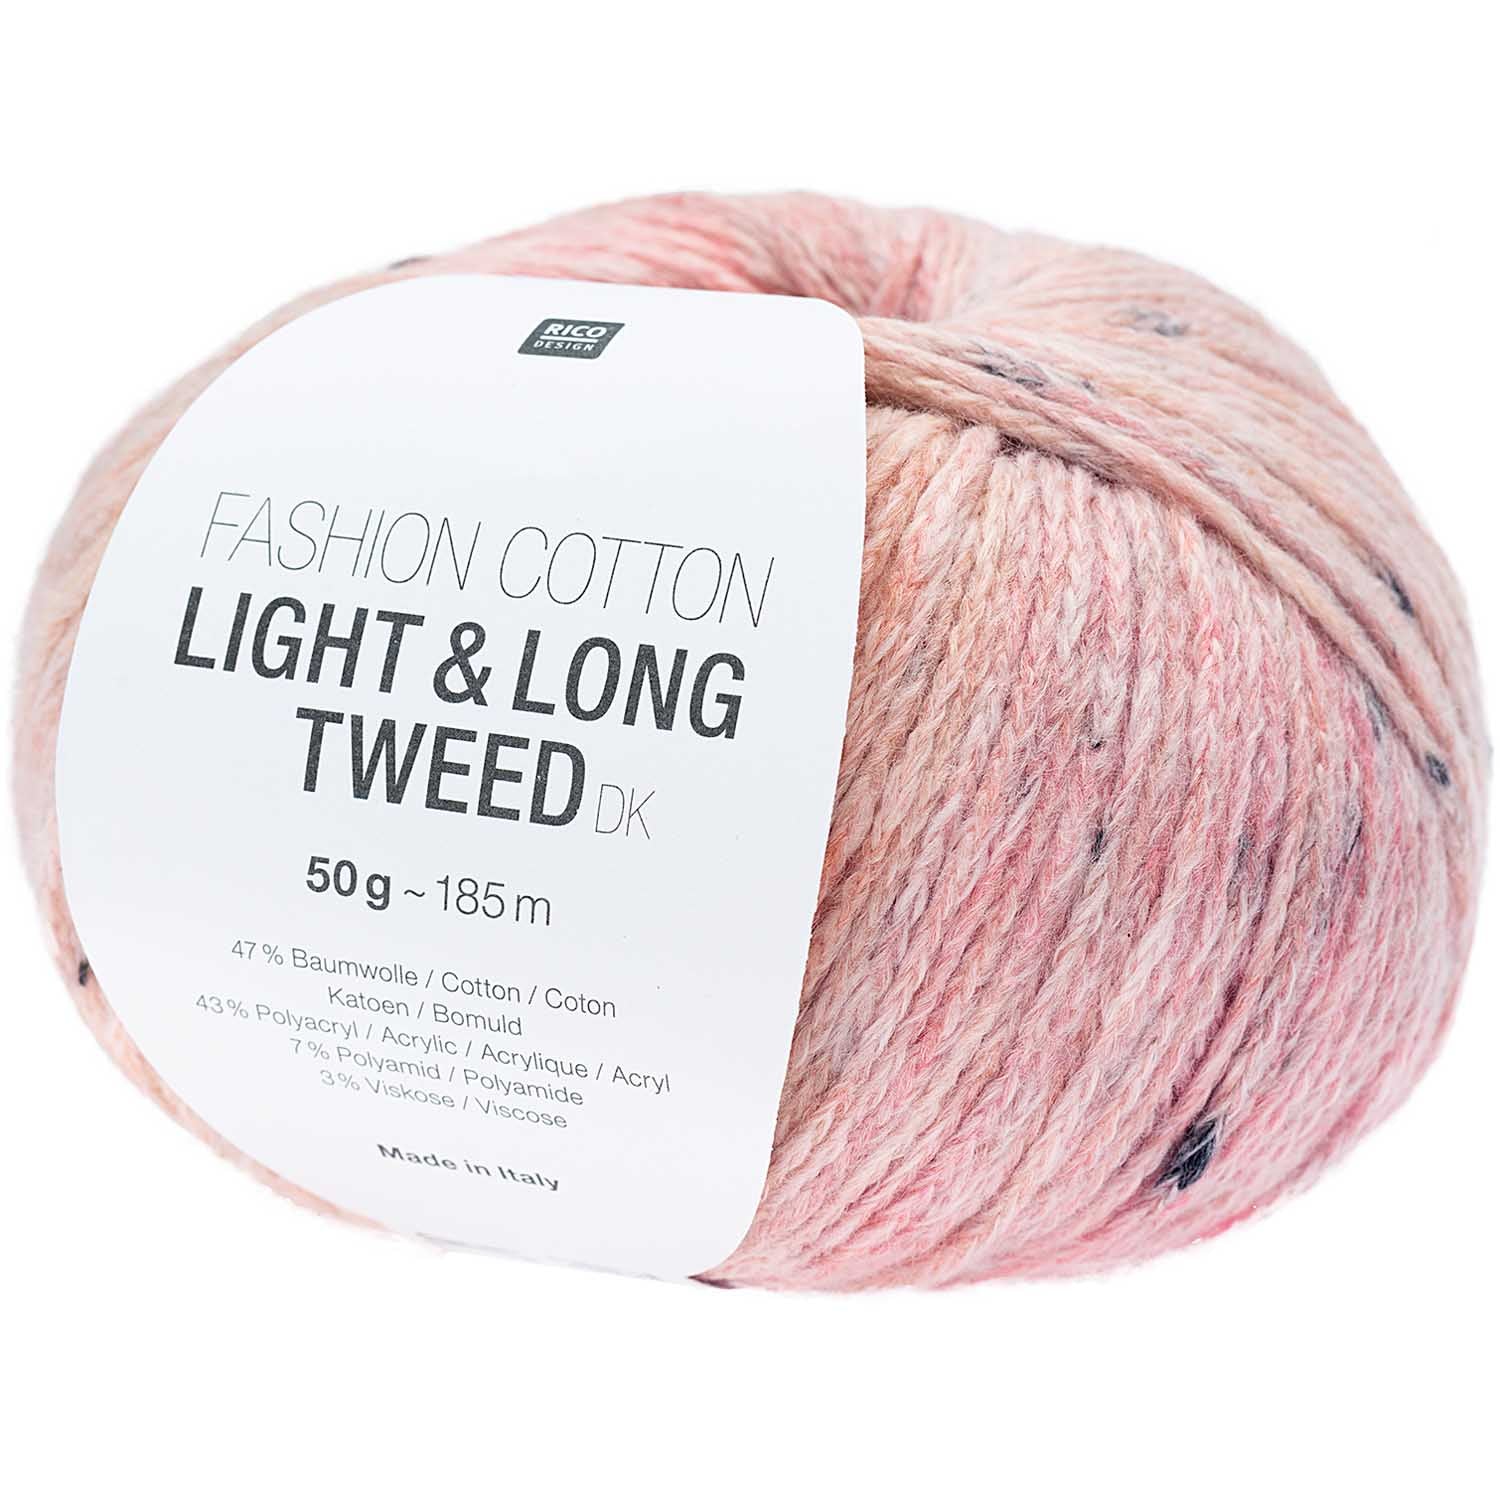 Rico Design Fashion Cotton Light & Long Tweed 001 Ecru